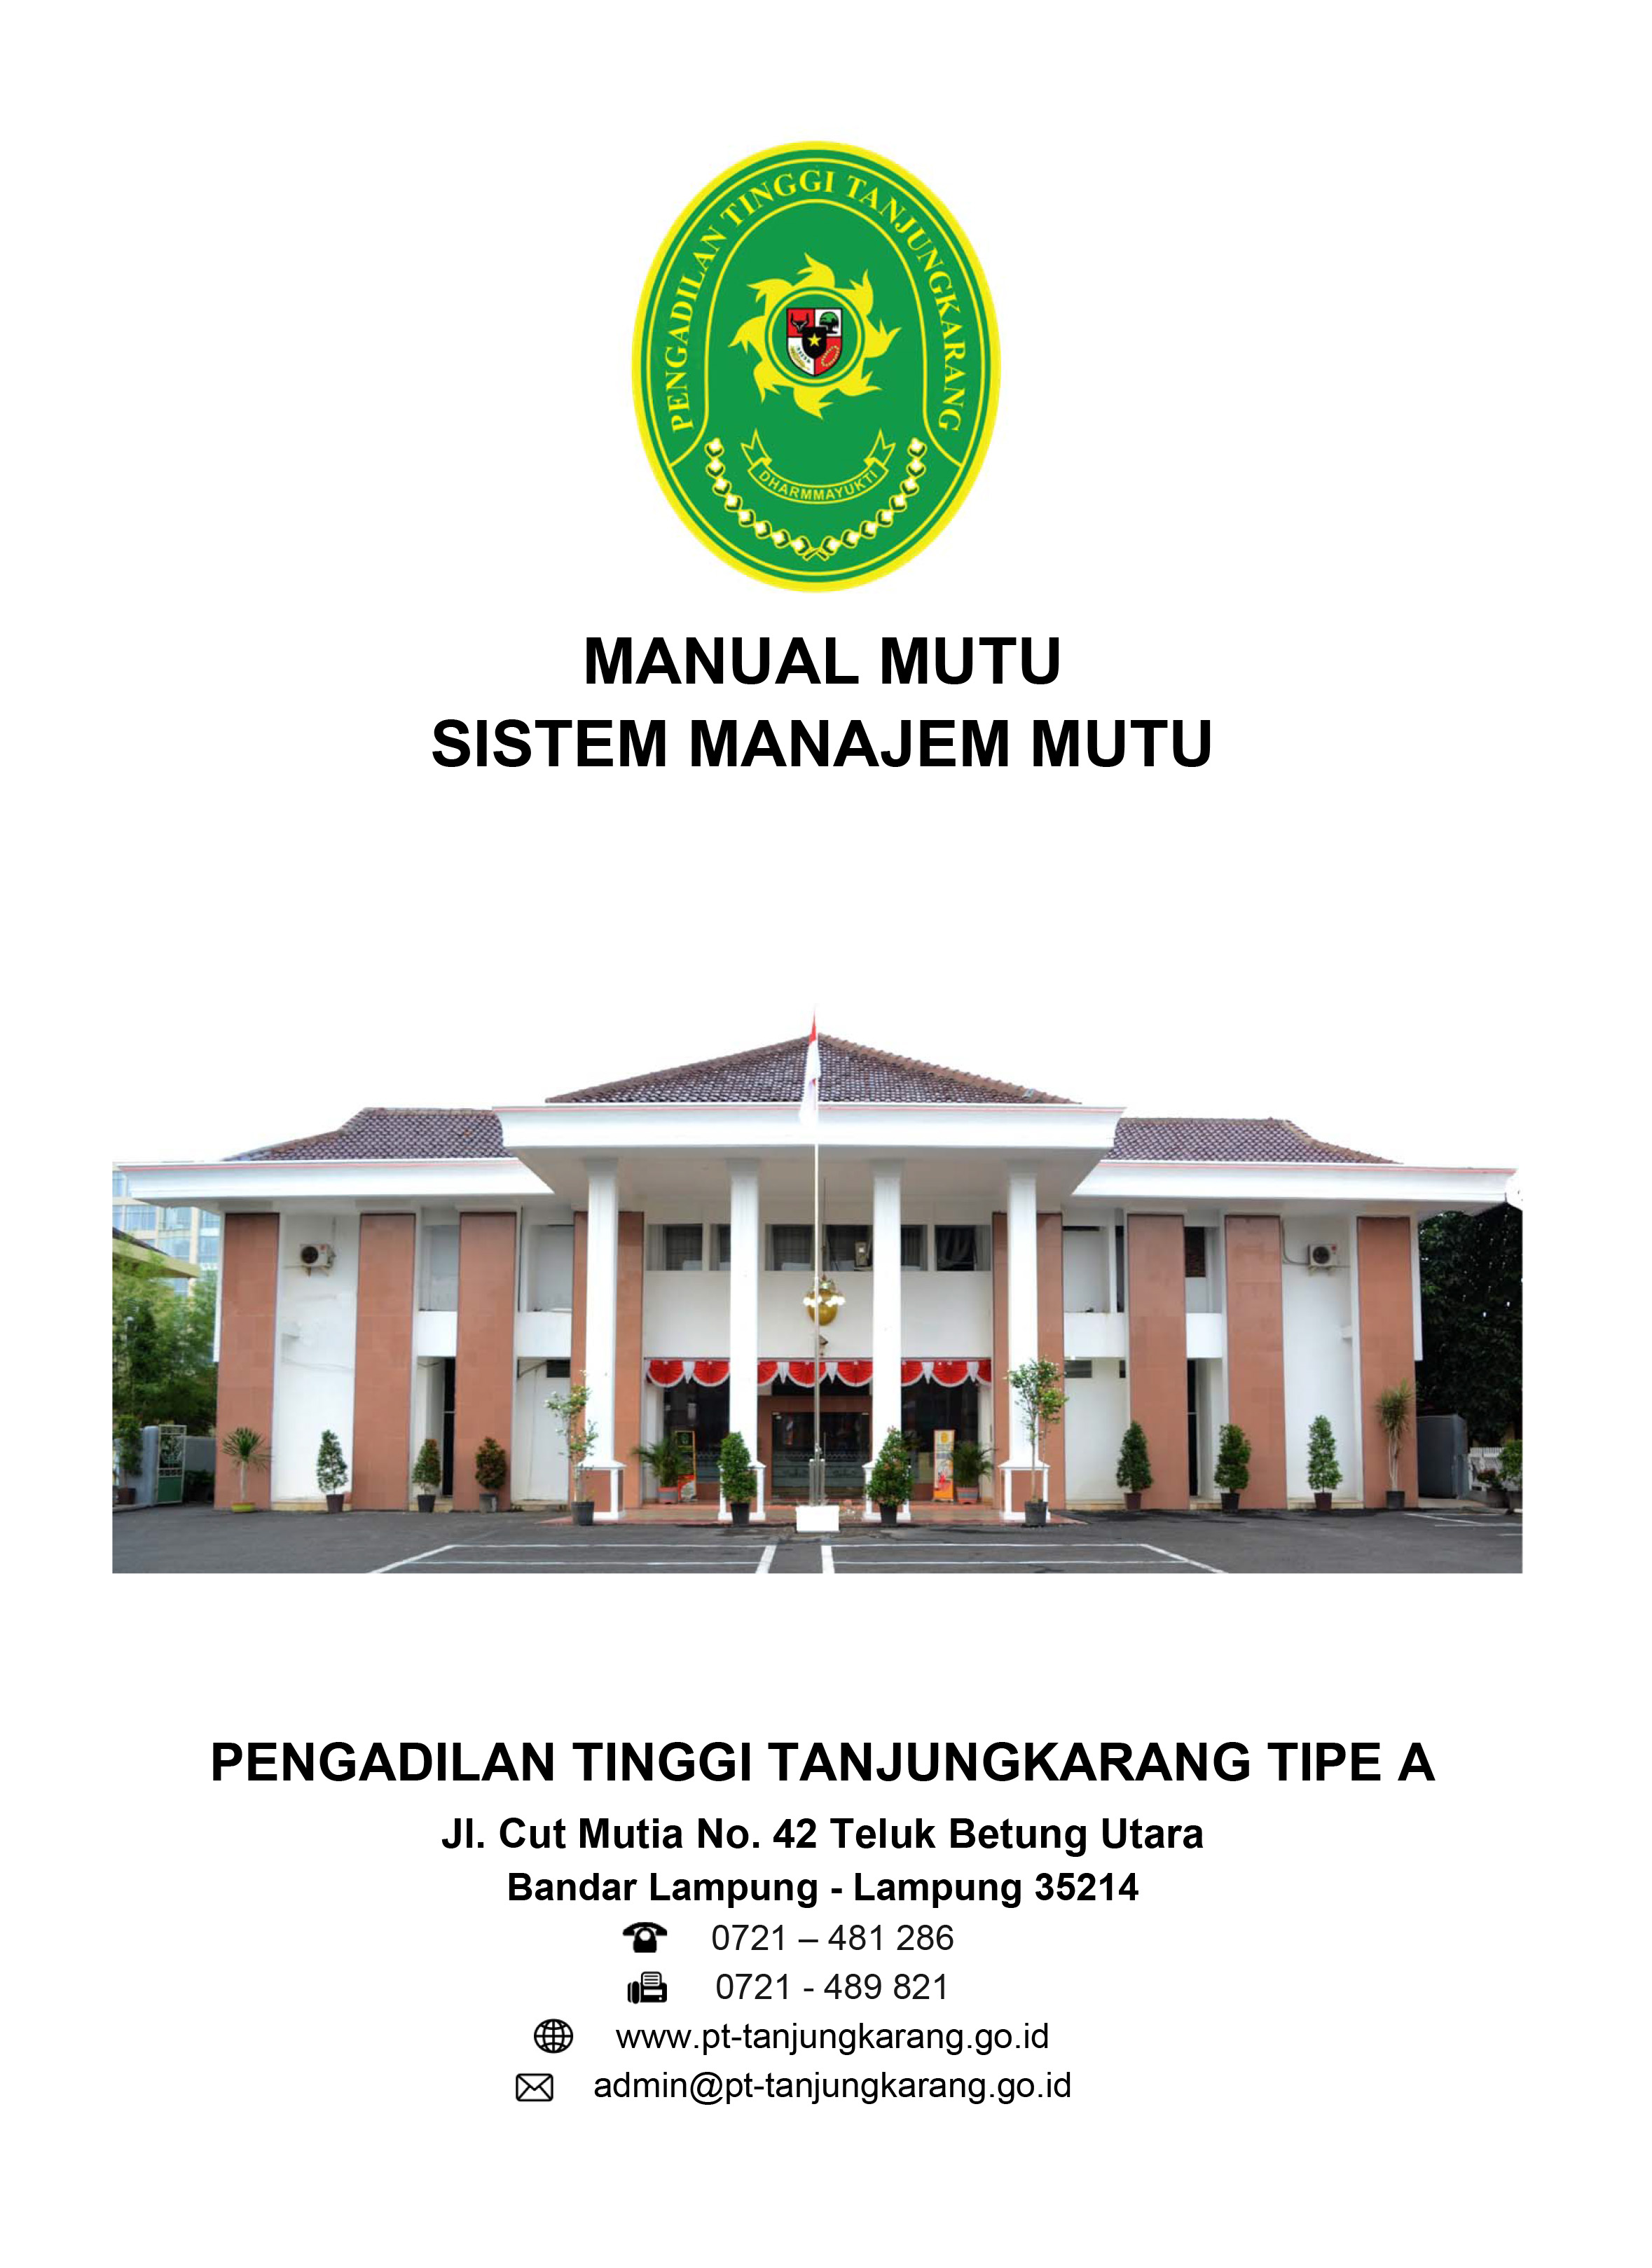 Manual Mutu (ROLANDC).jpg